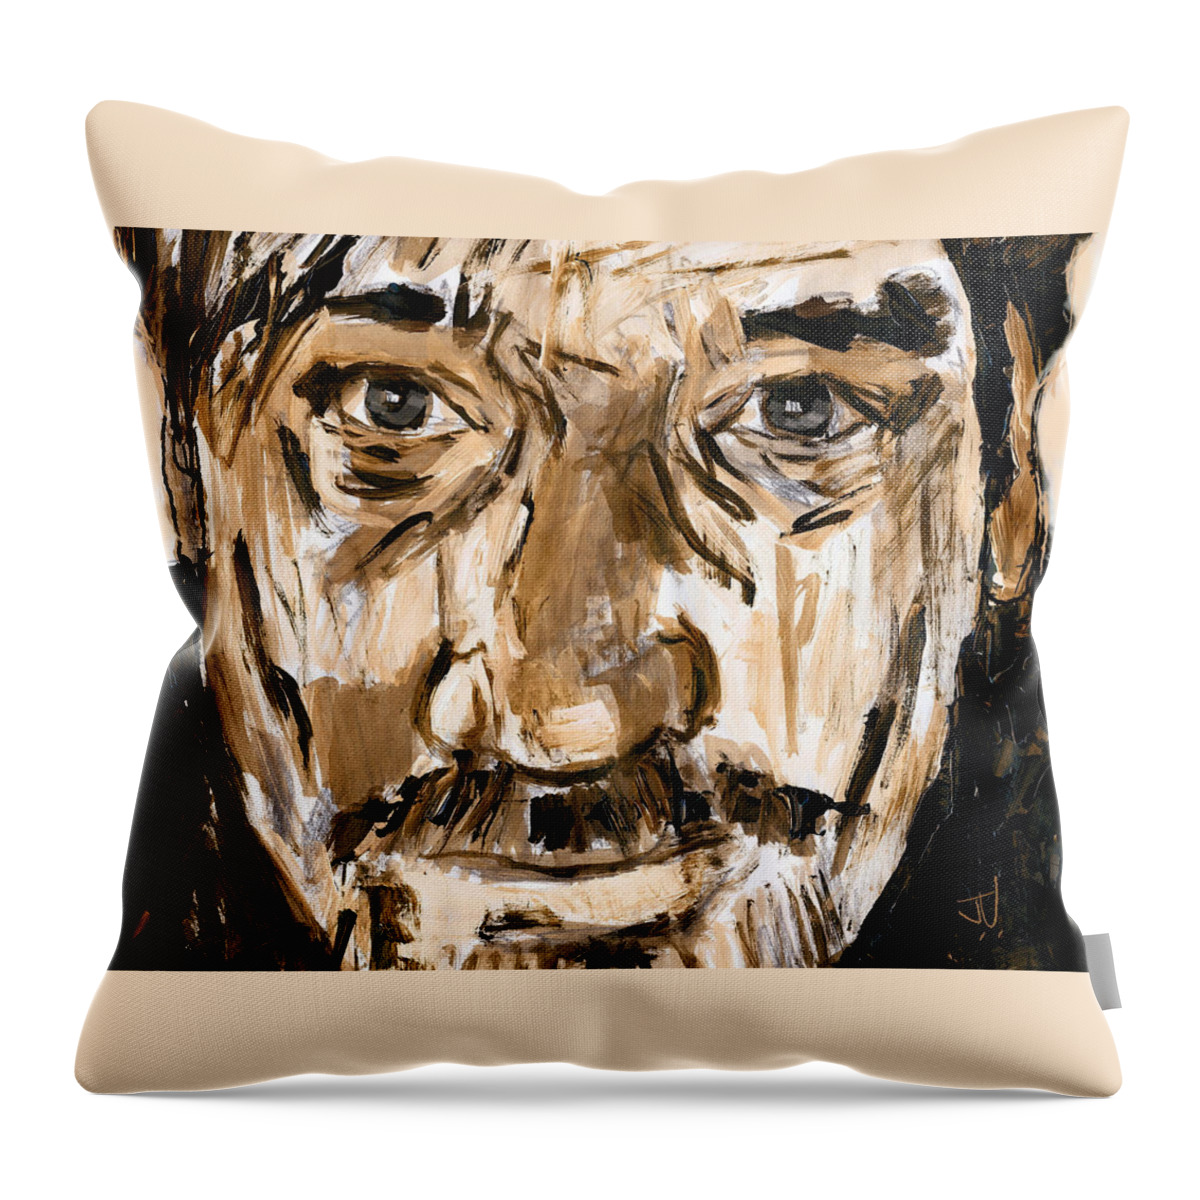 Portrait Throw Pillow featuring the digital art Bart by Jim Vance